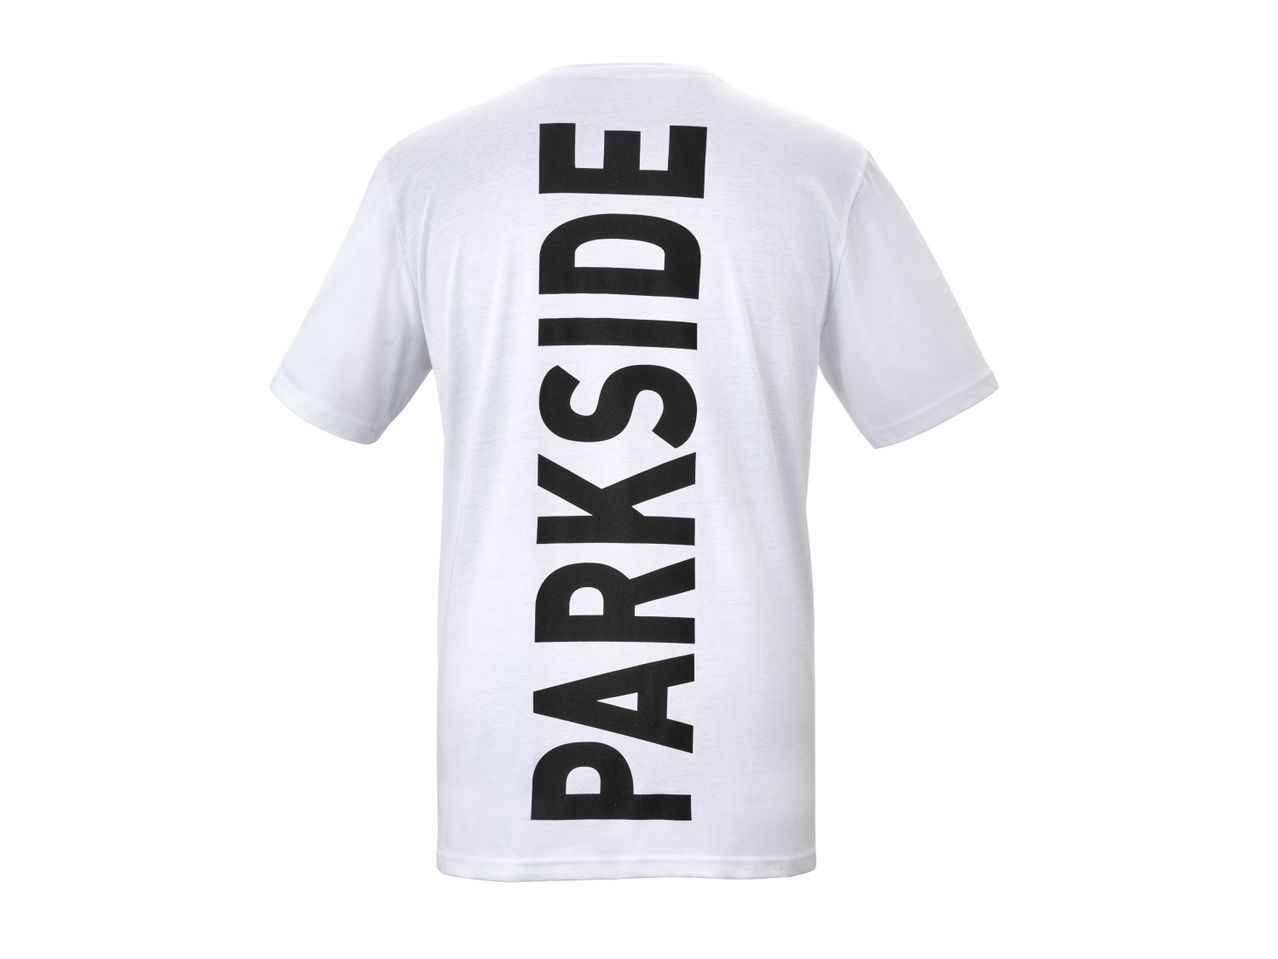 T-shirt da uomo Parkside , prezzo 4.99 EUR